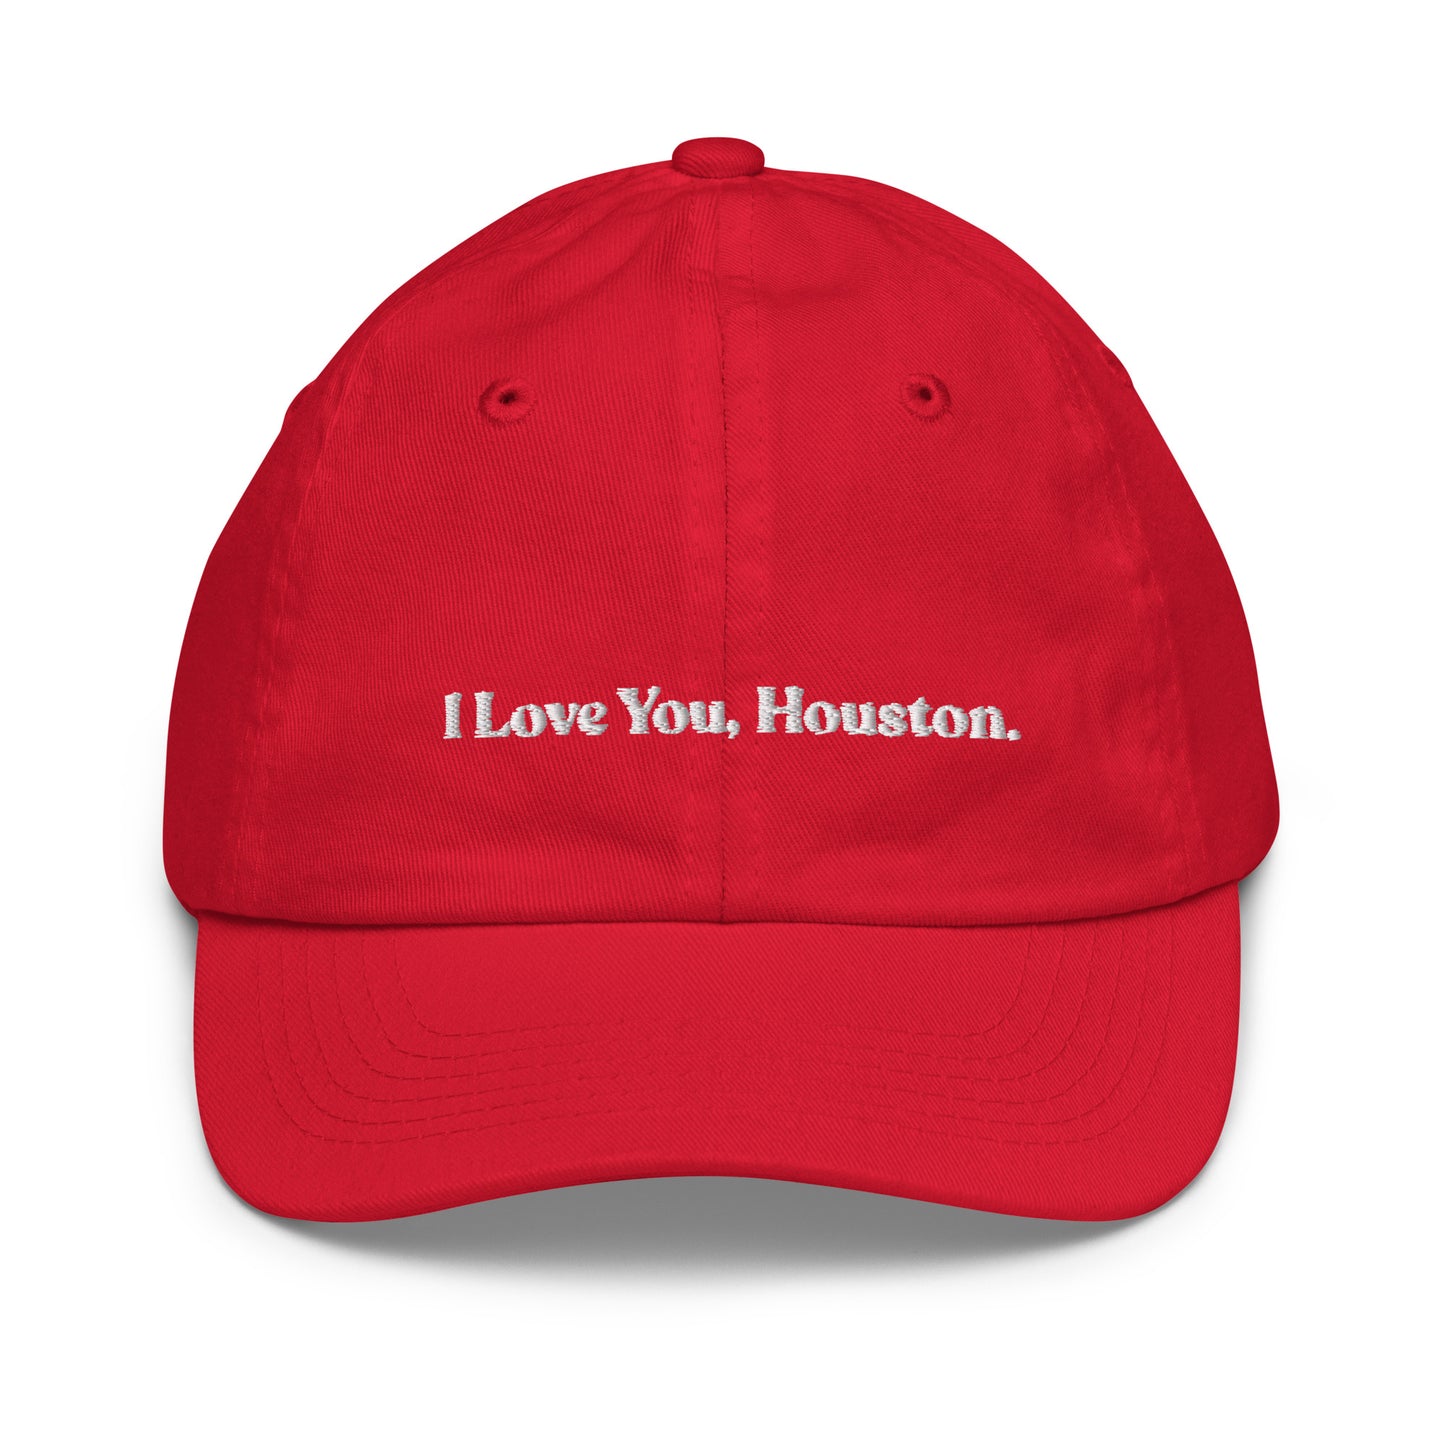 I Love You, Houston Youth Baseball Cap